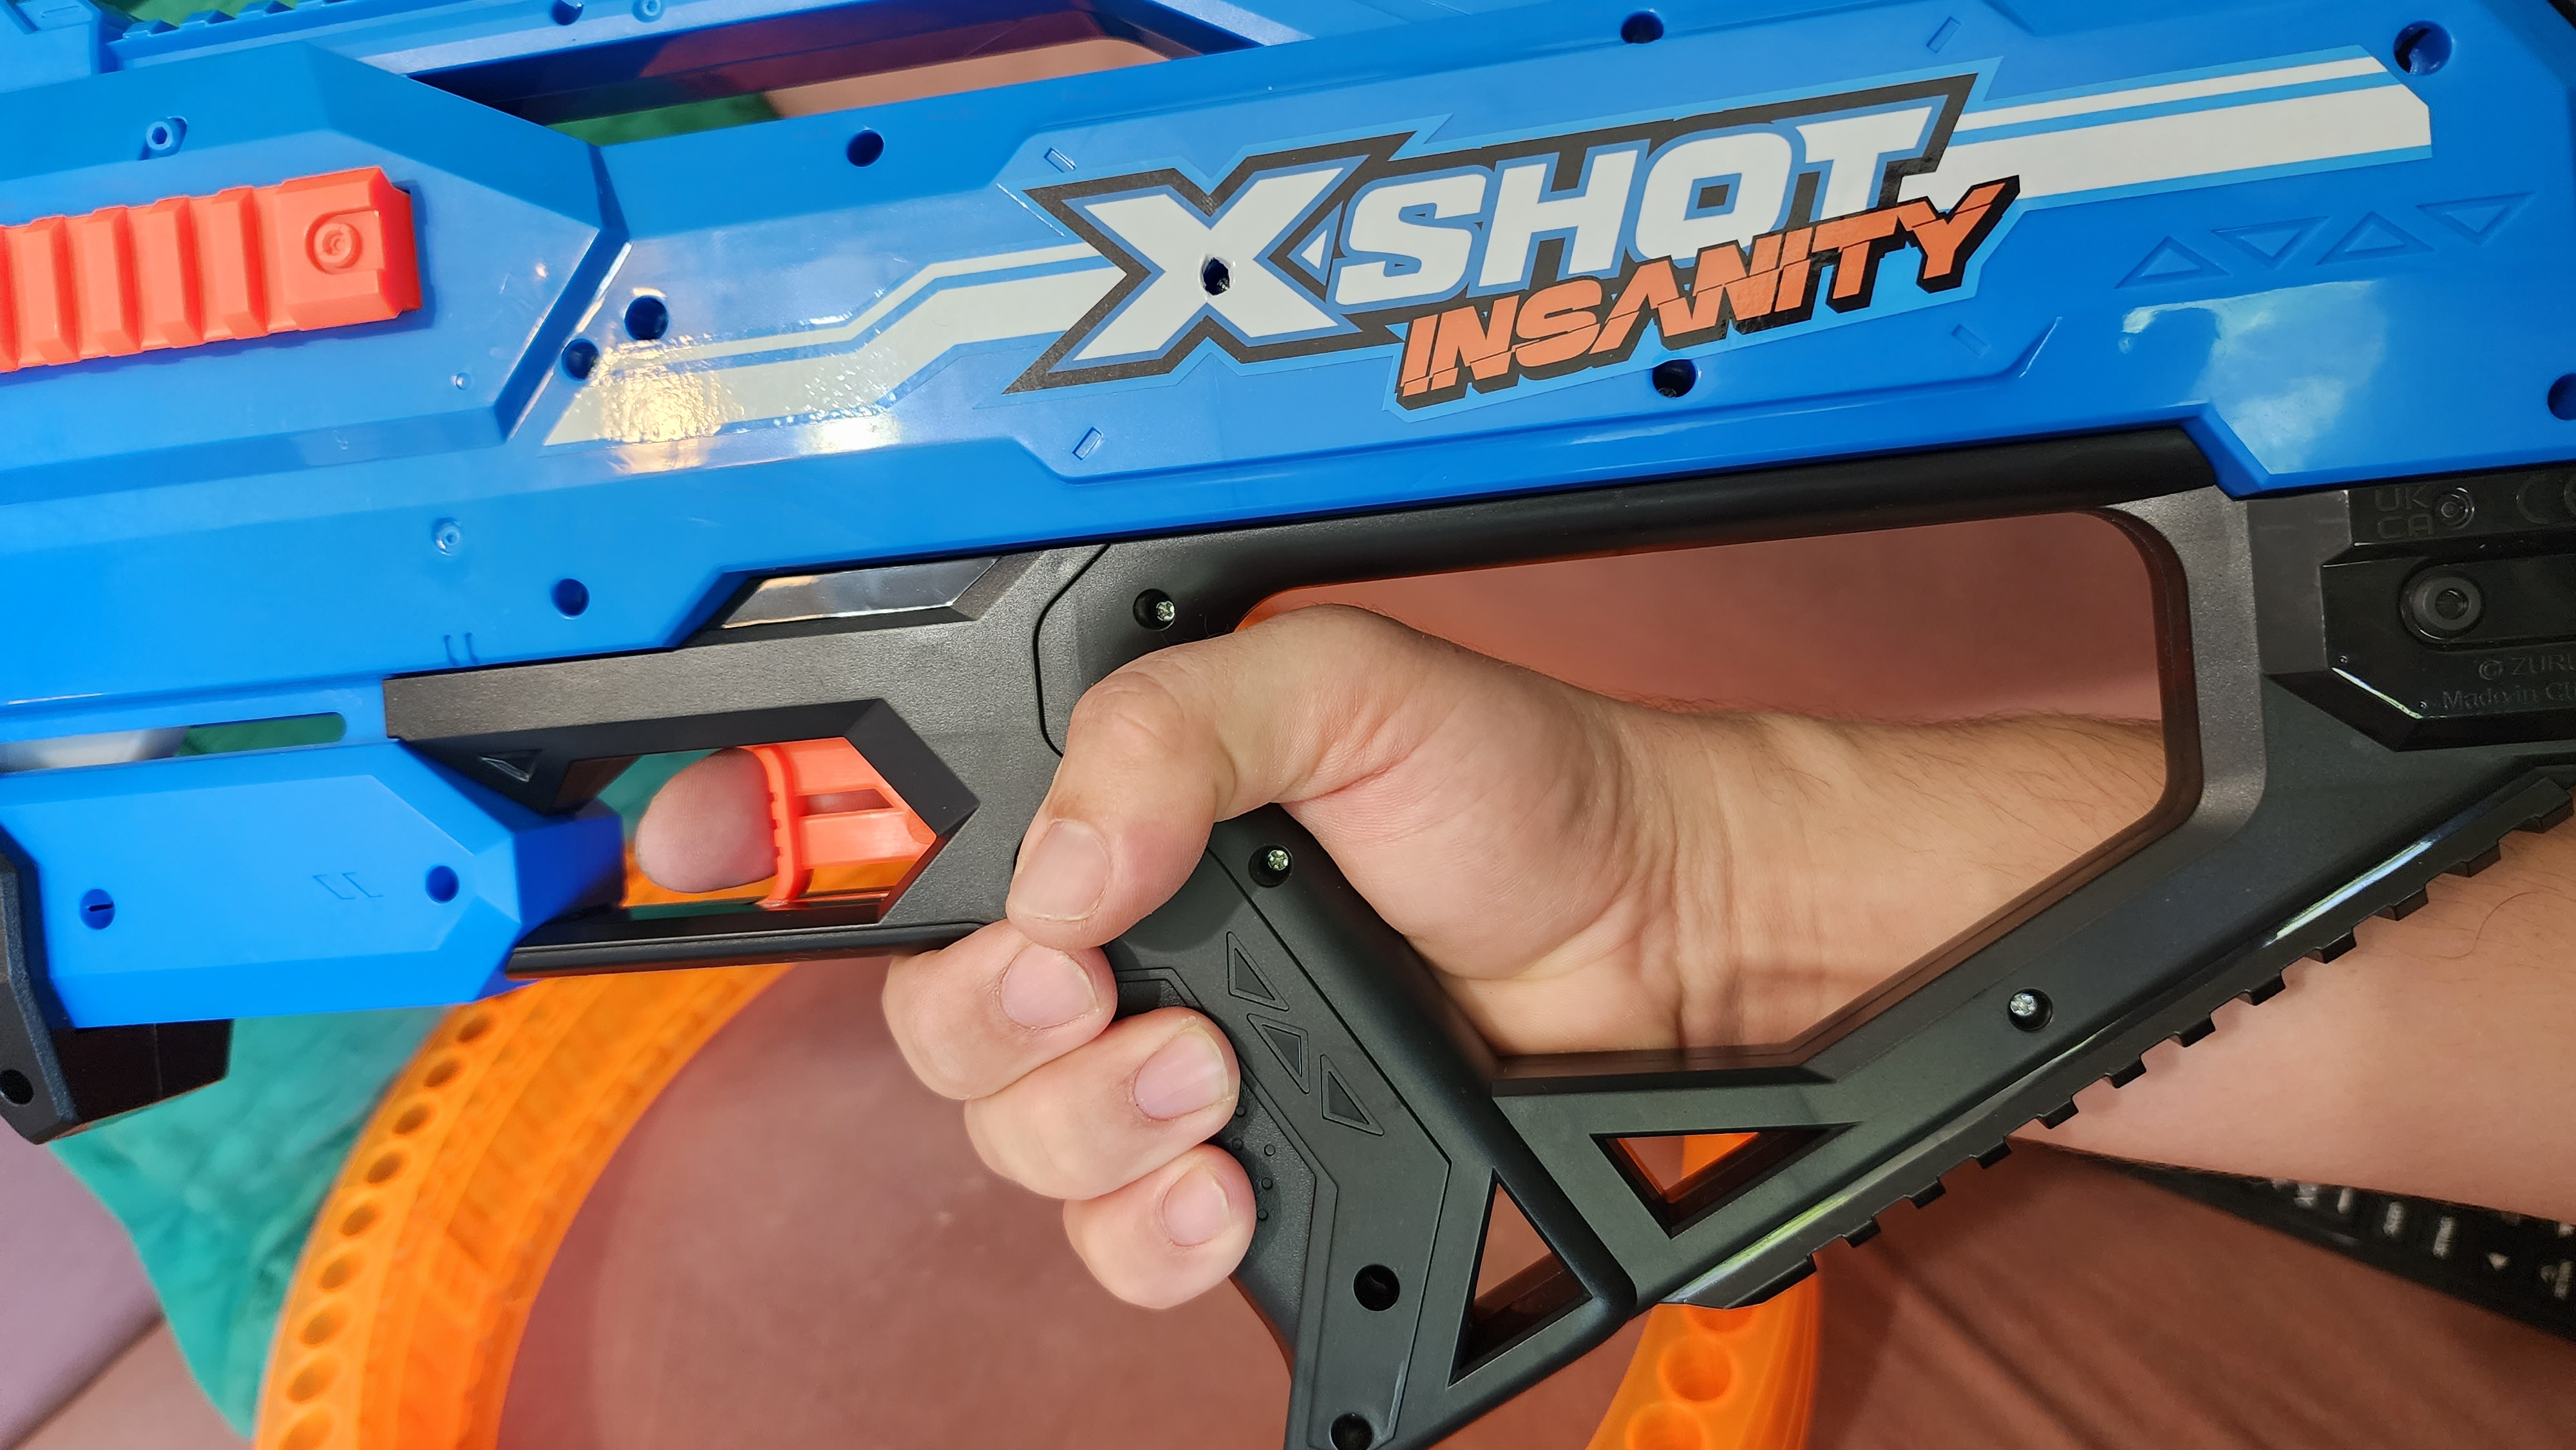 X-Shot Insanity Mad Mega Barrel